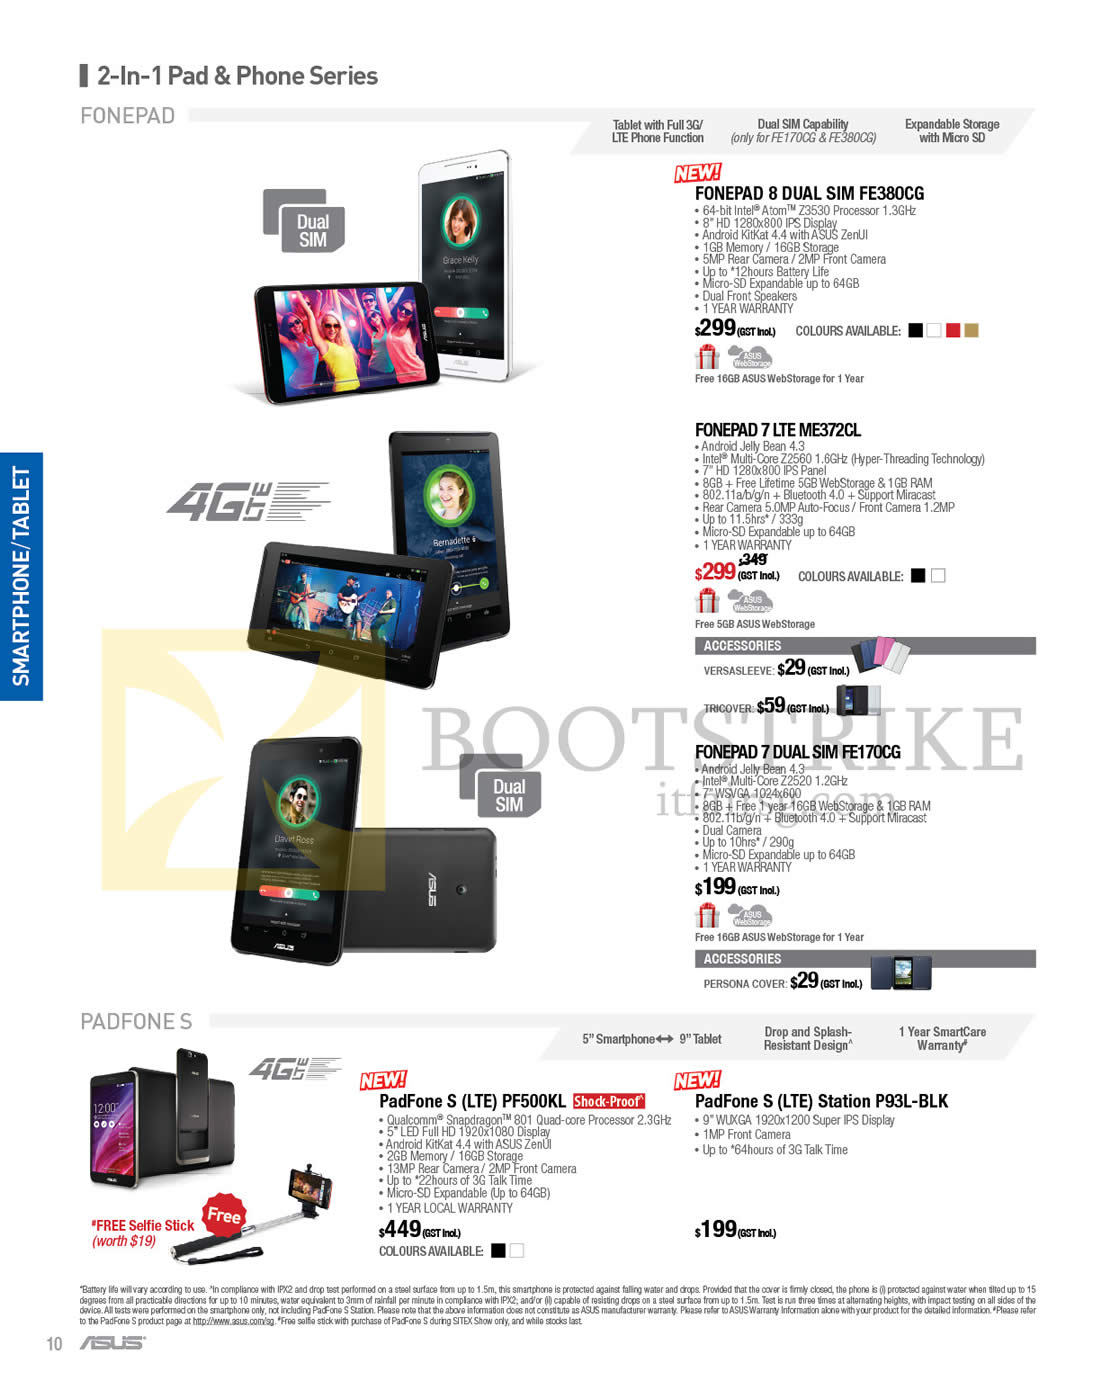 SITEX 2014 price list image brochure of ASUS Tablets Fonepad 8 Dual Sim FE380CG, 7 LTE ME372CL, 7 Dual Sim FE170CG, PadFone S PF500KL, S P93L-BLK